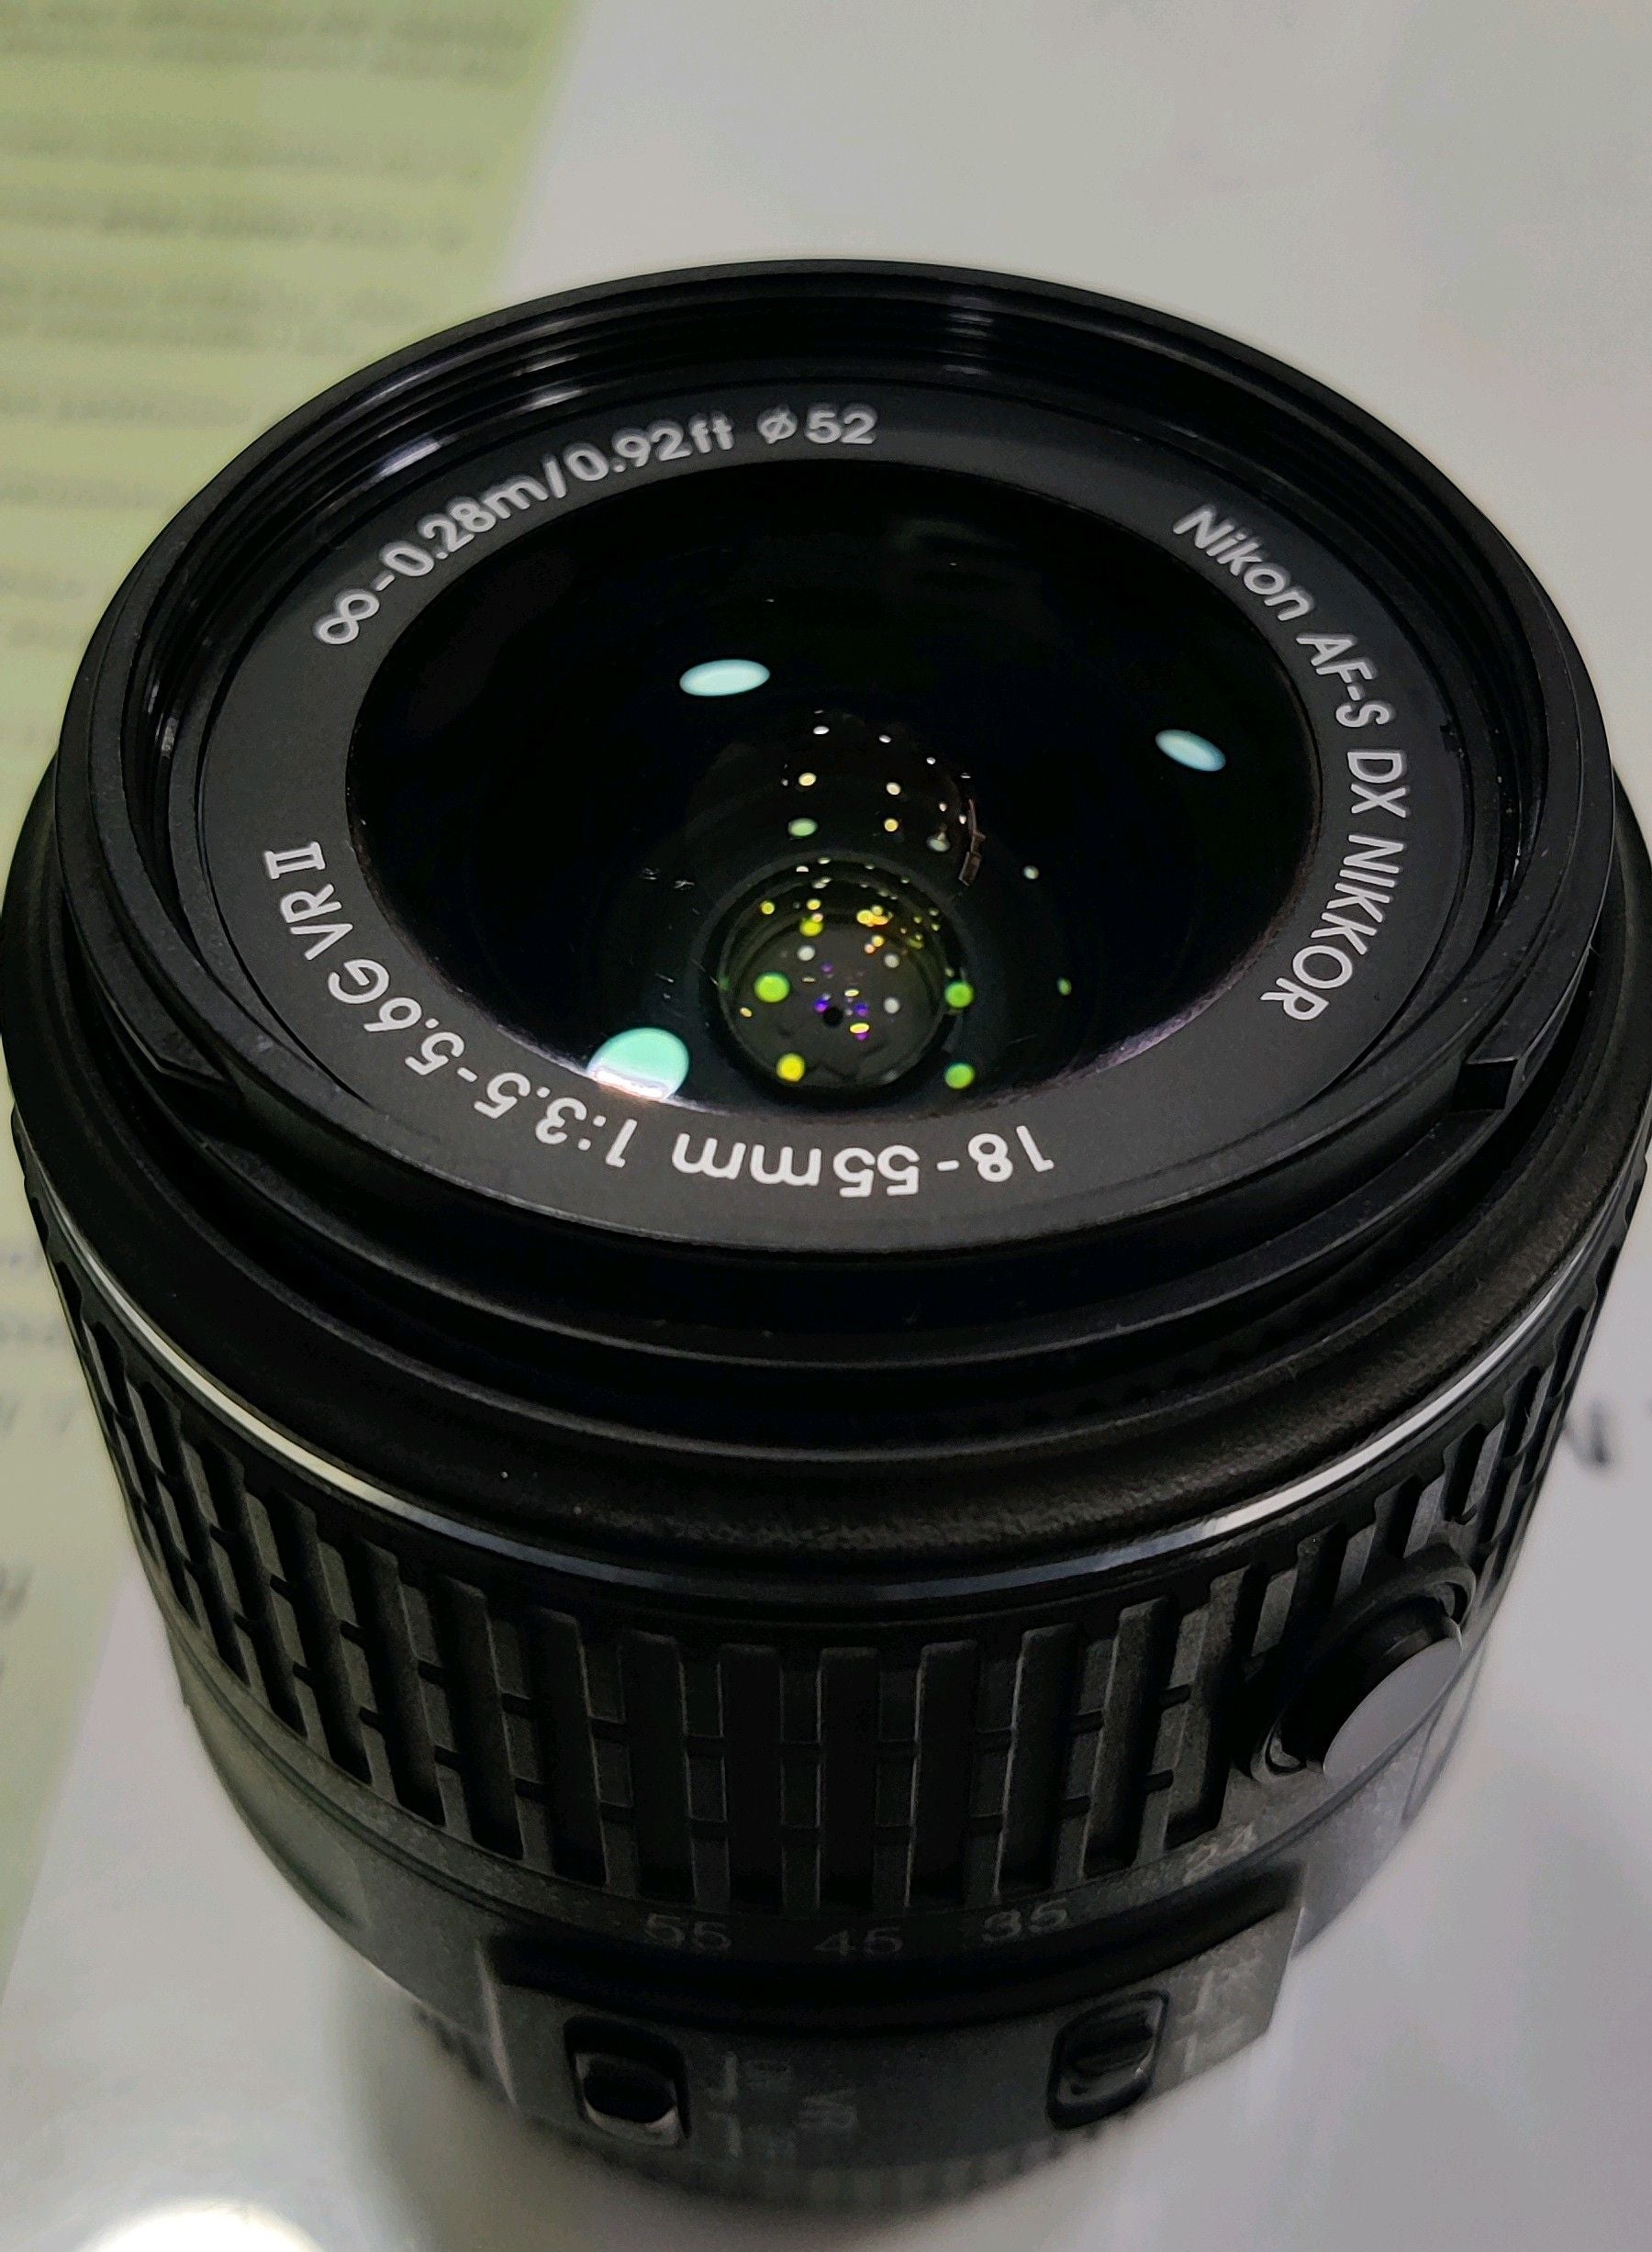 प्रयुक्त Nikon AF S 18 55 मिमी VR F 3.5-5.6 GII